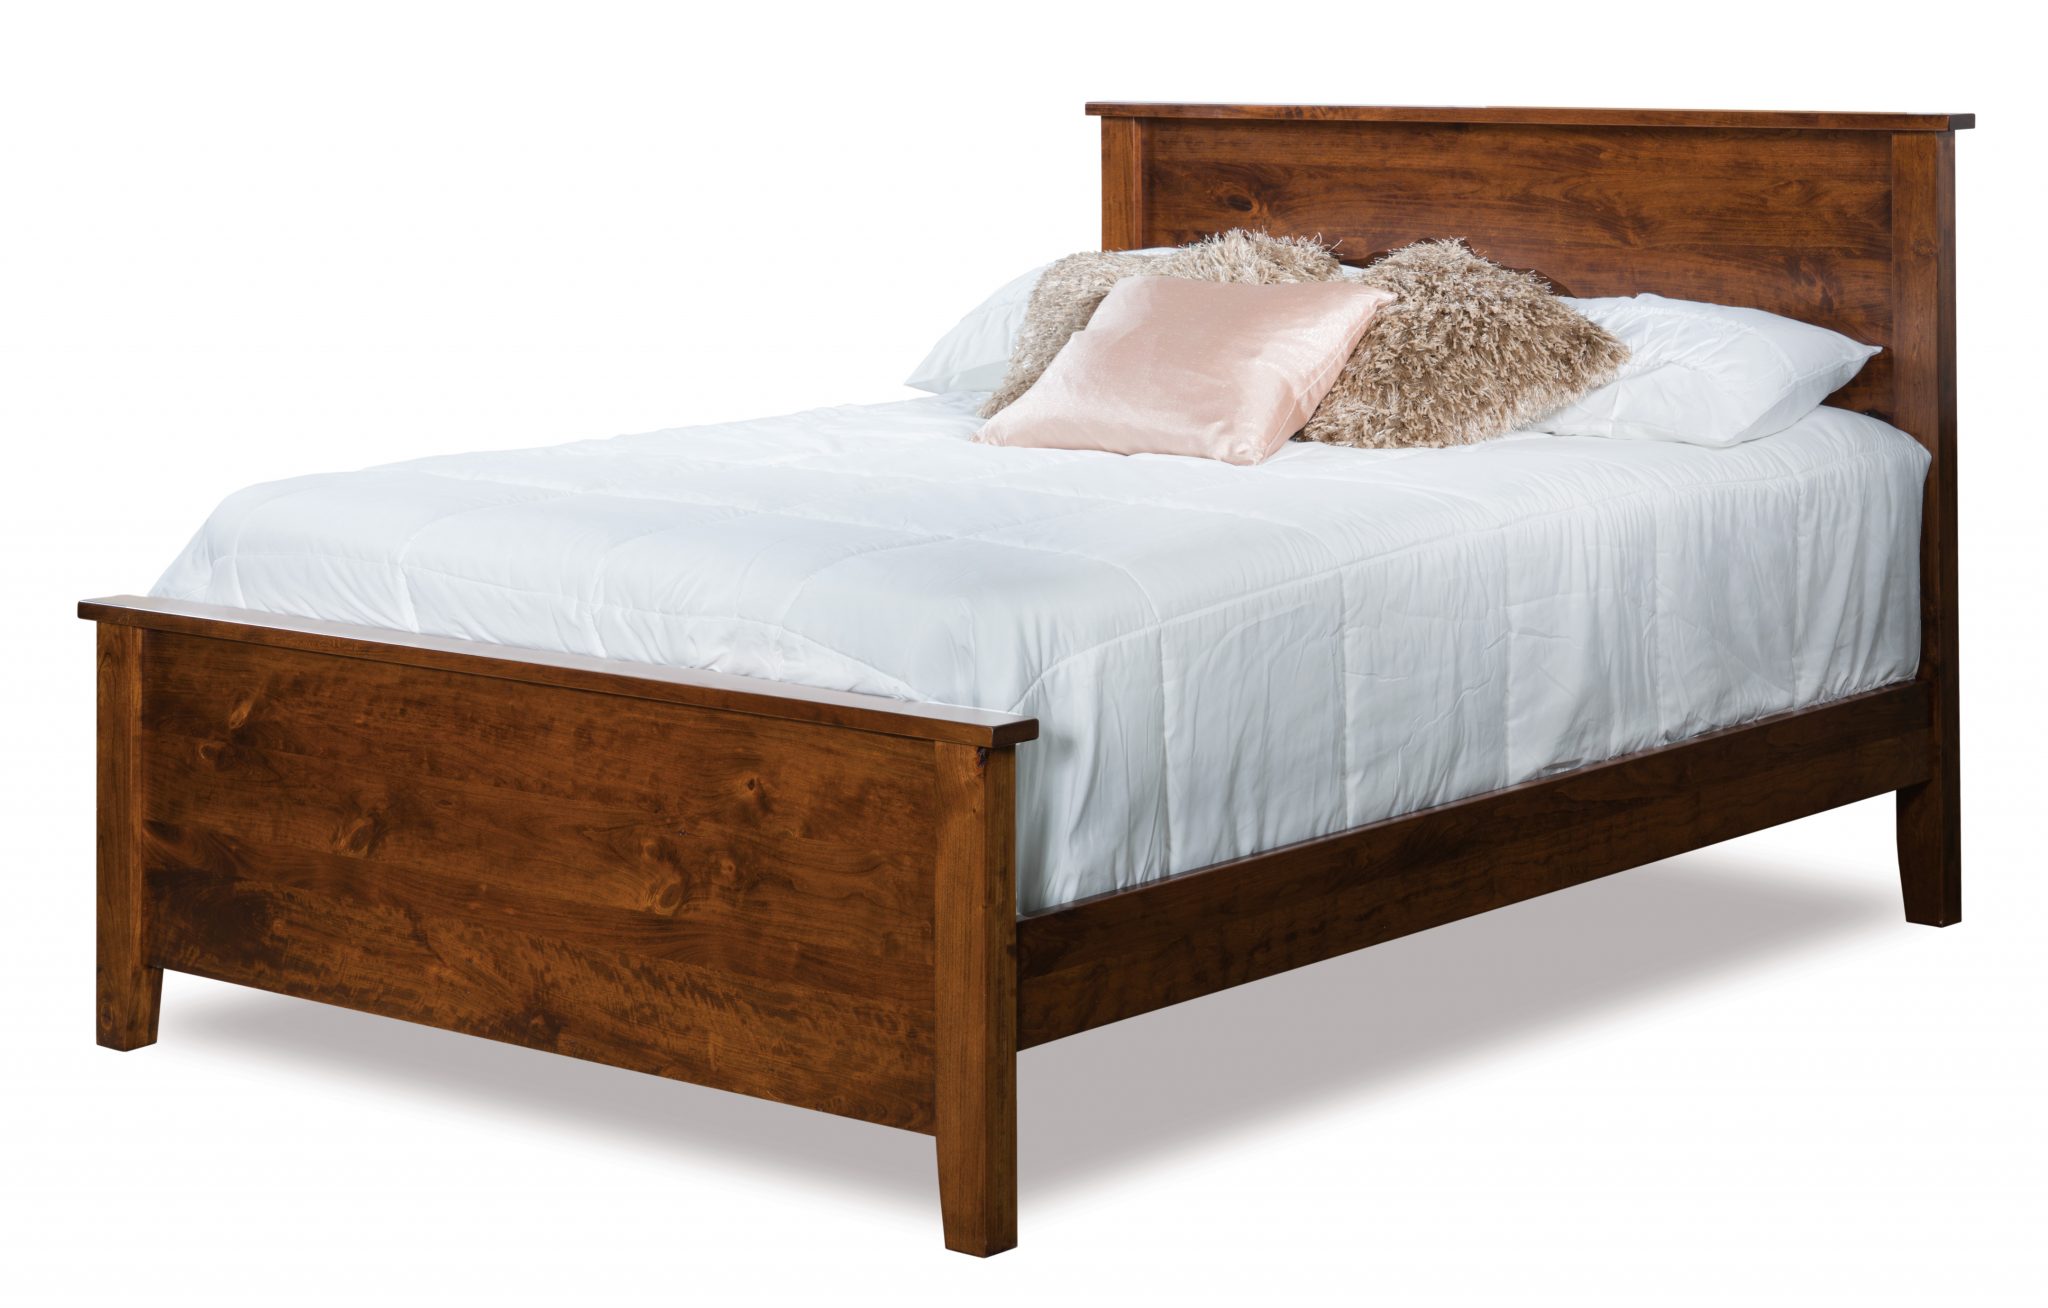 shaker wood bedroom furniture